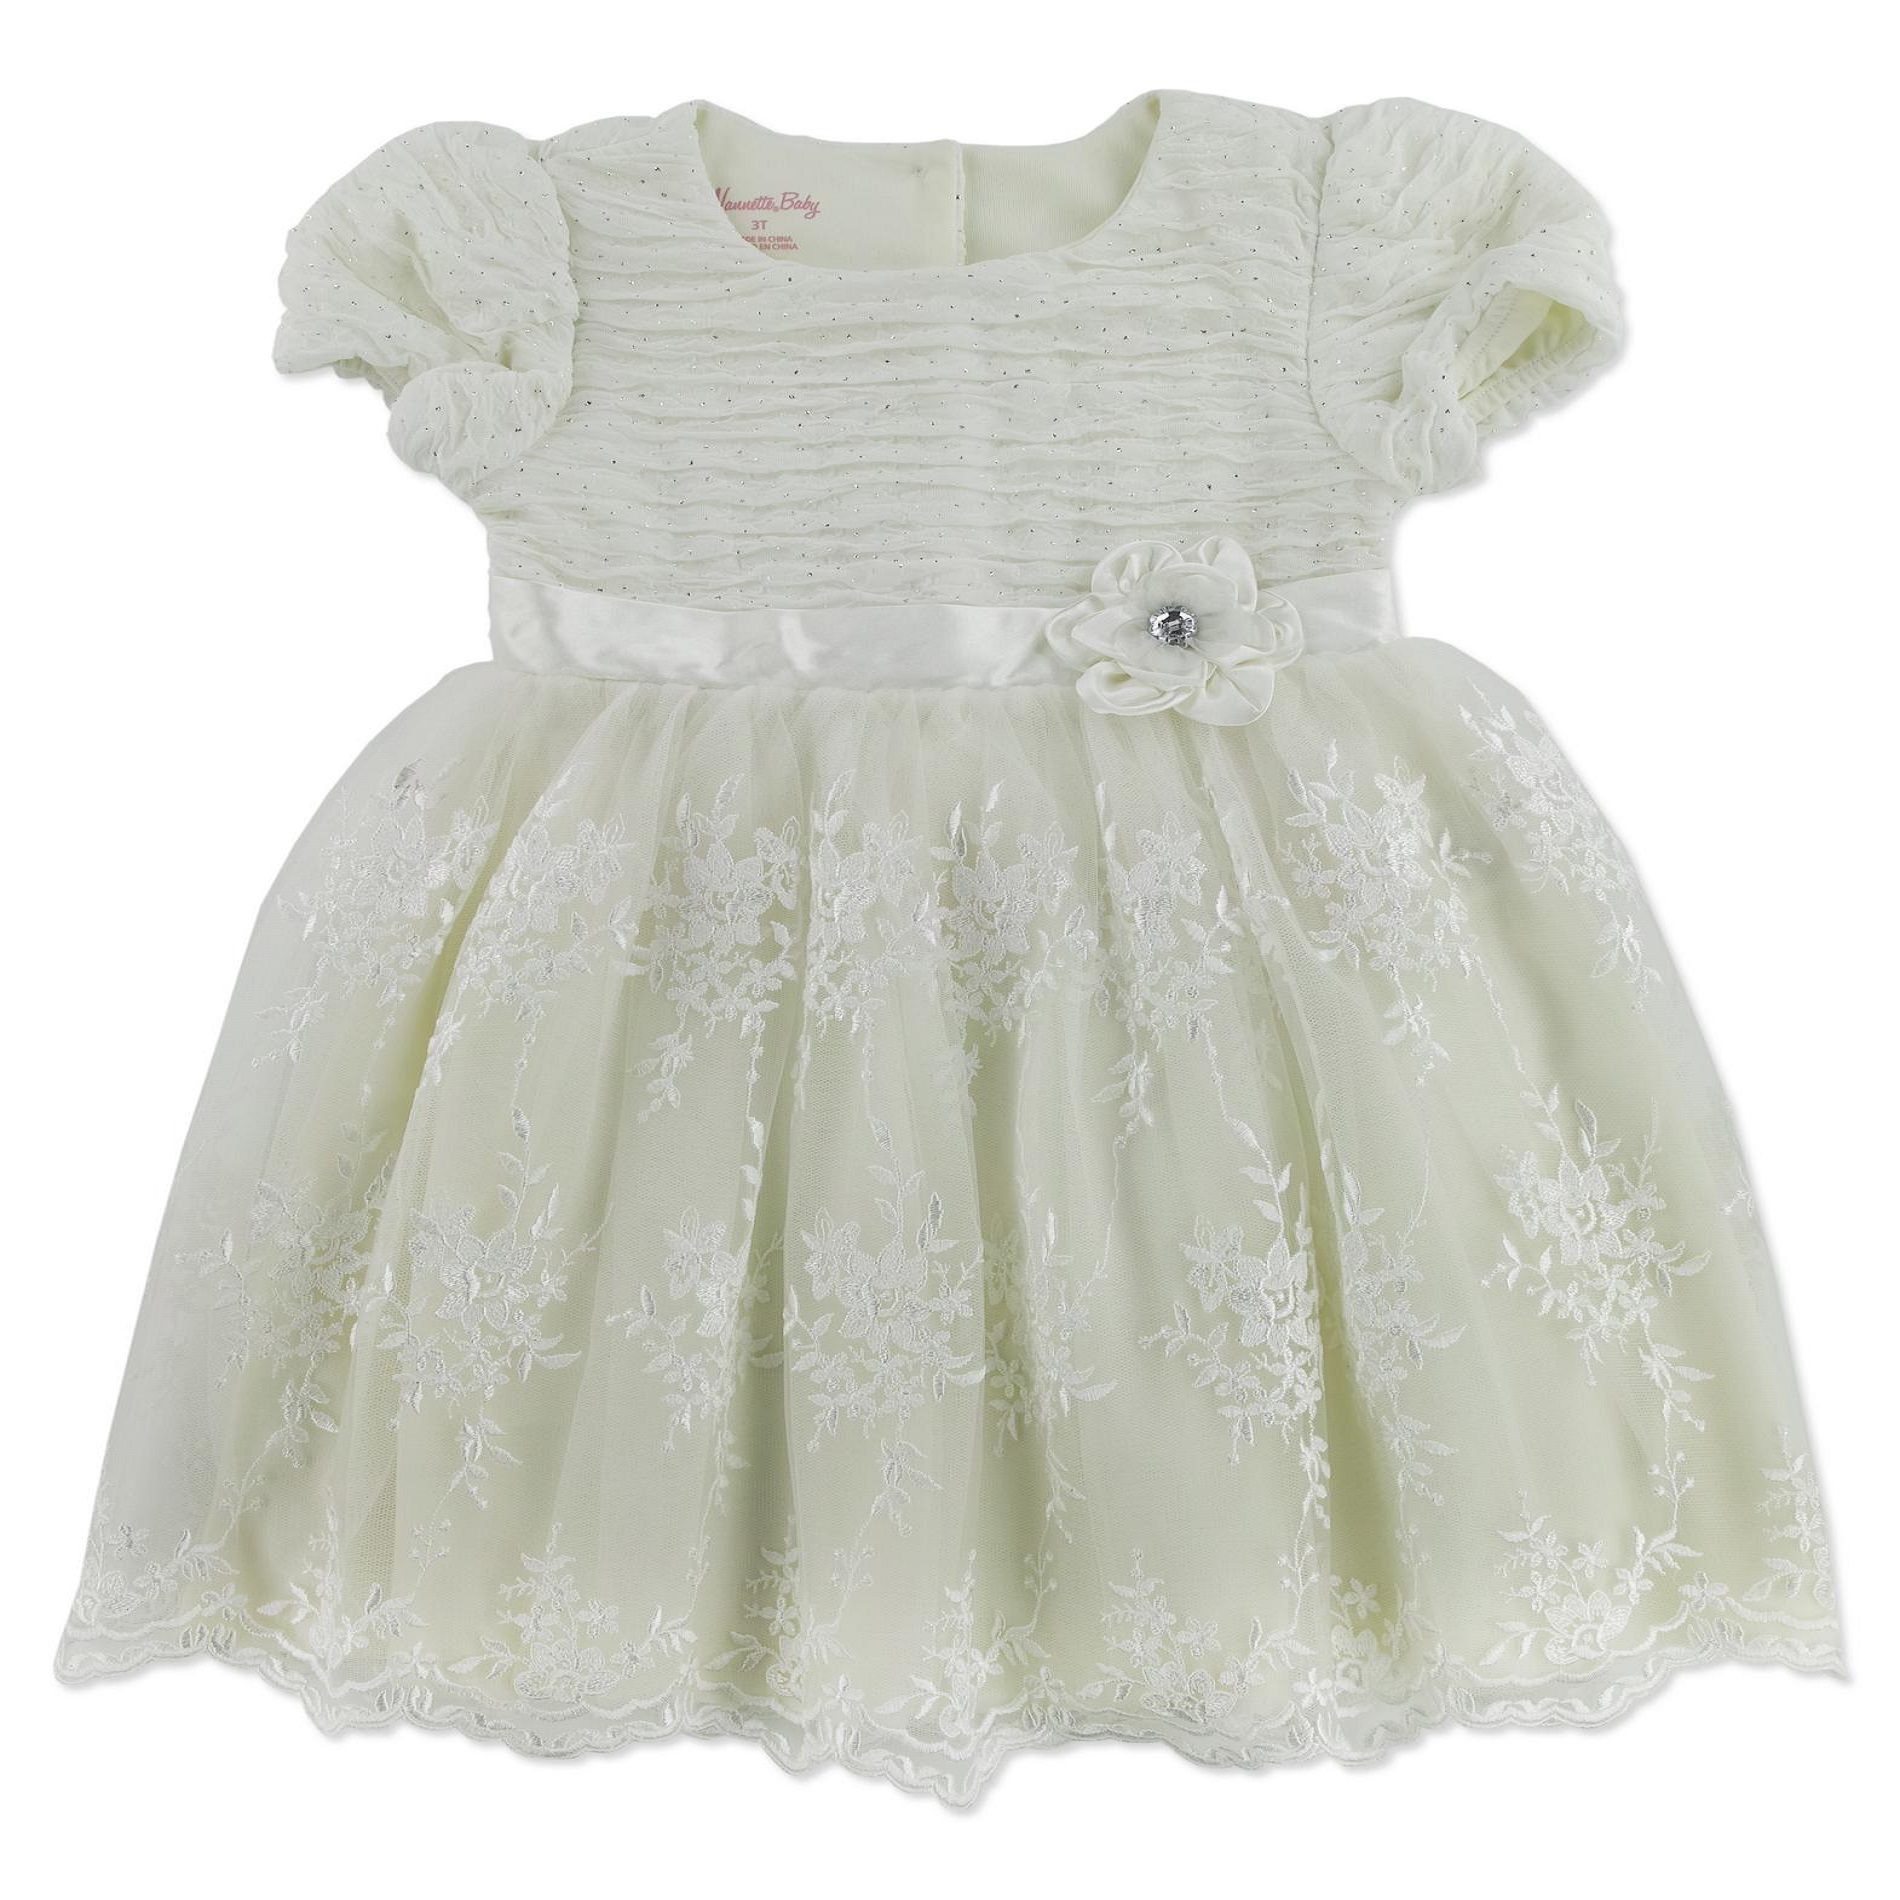 Nanette Newborn, Infant & Toddler Girls' Lace Occasion Dress - Floral